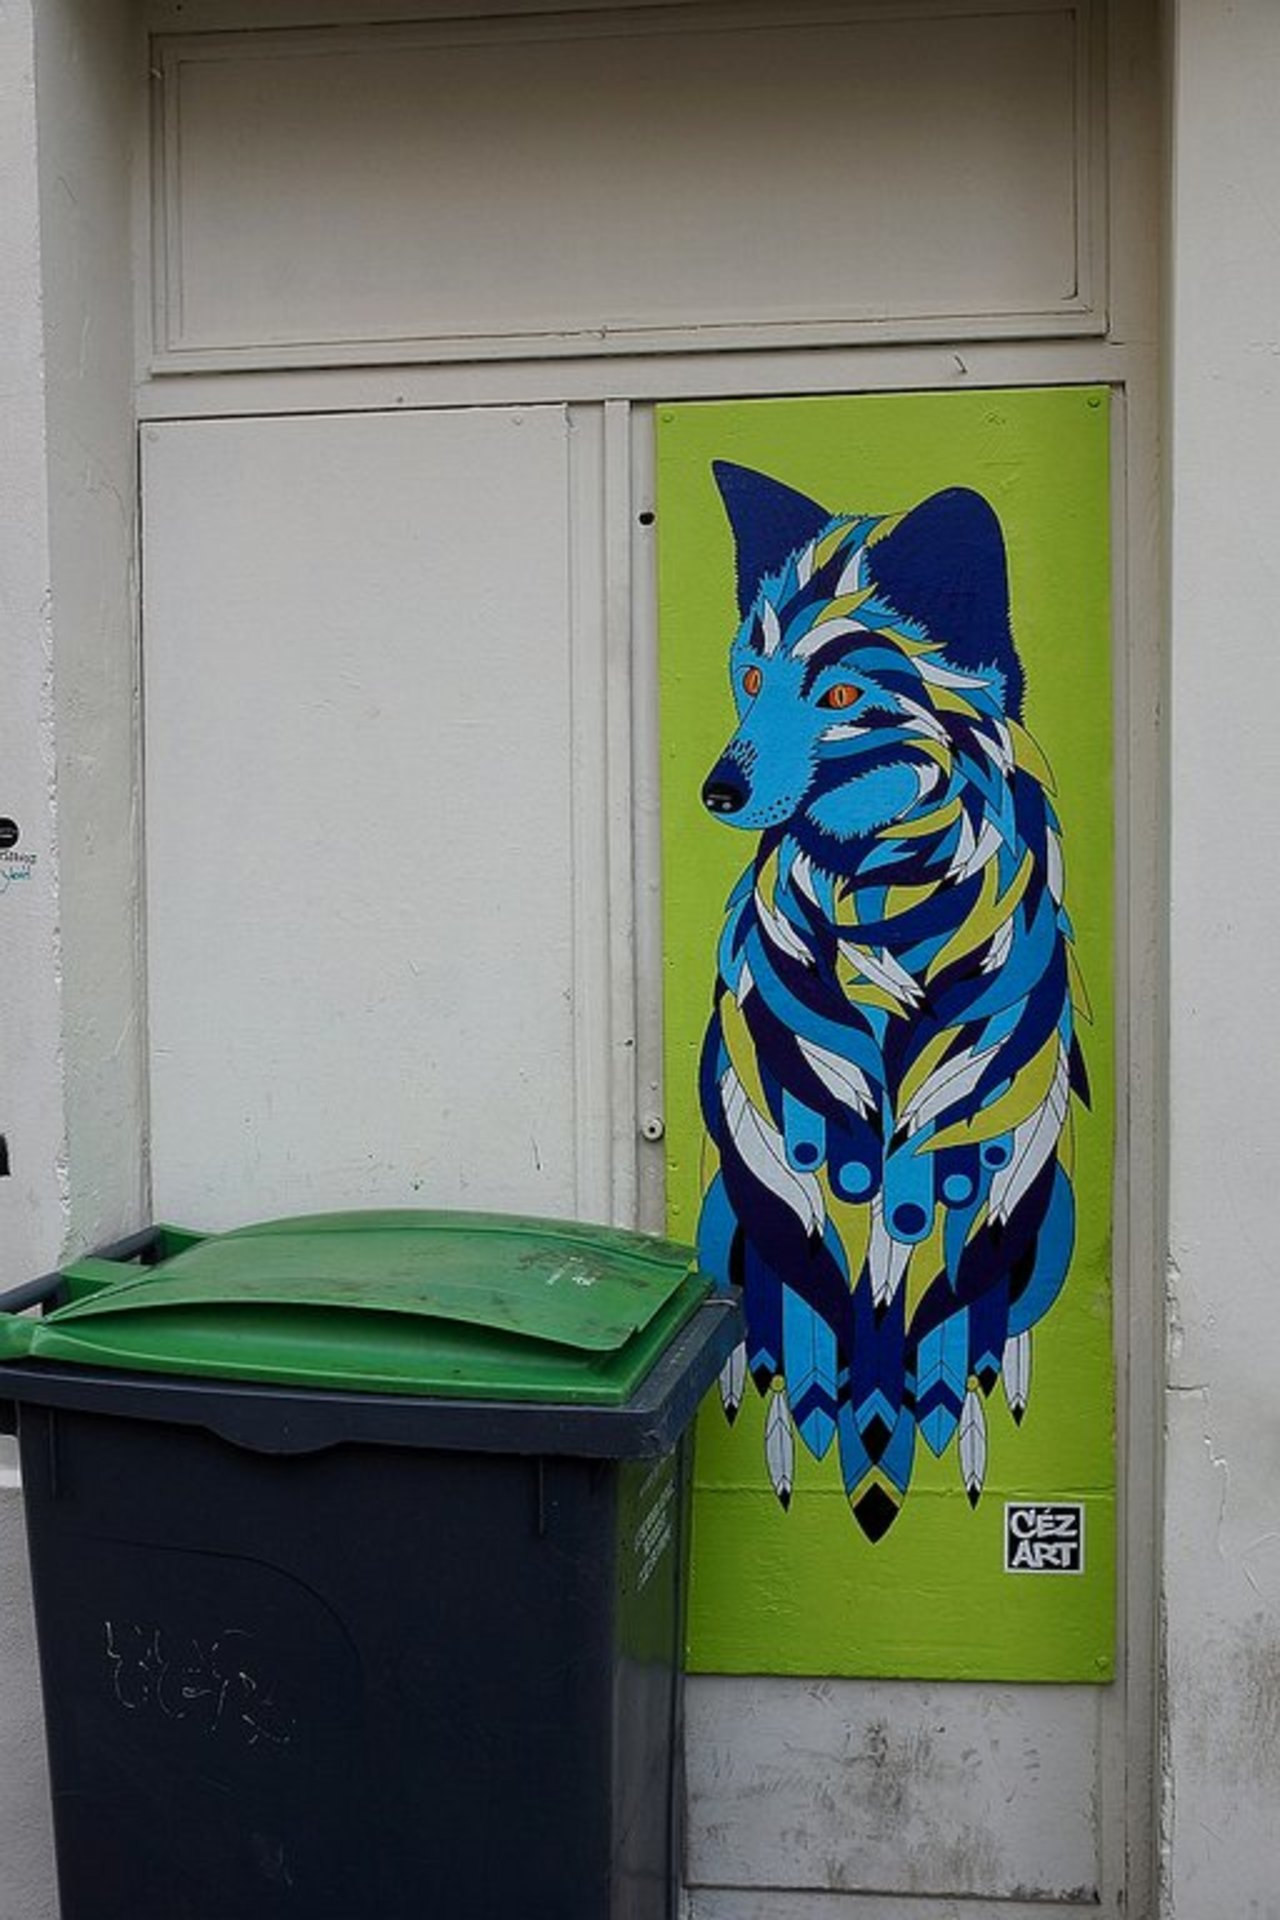 RT @urbacolors: Street Art by anonymous in #Paris http://www.urbacolors.com #art #mural #graffiti #streetart https://t.co/6HjMX2PHLn